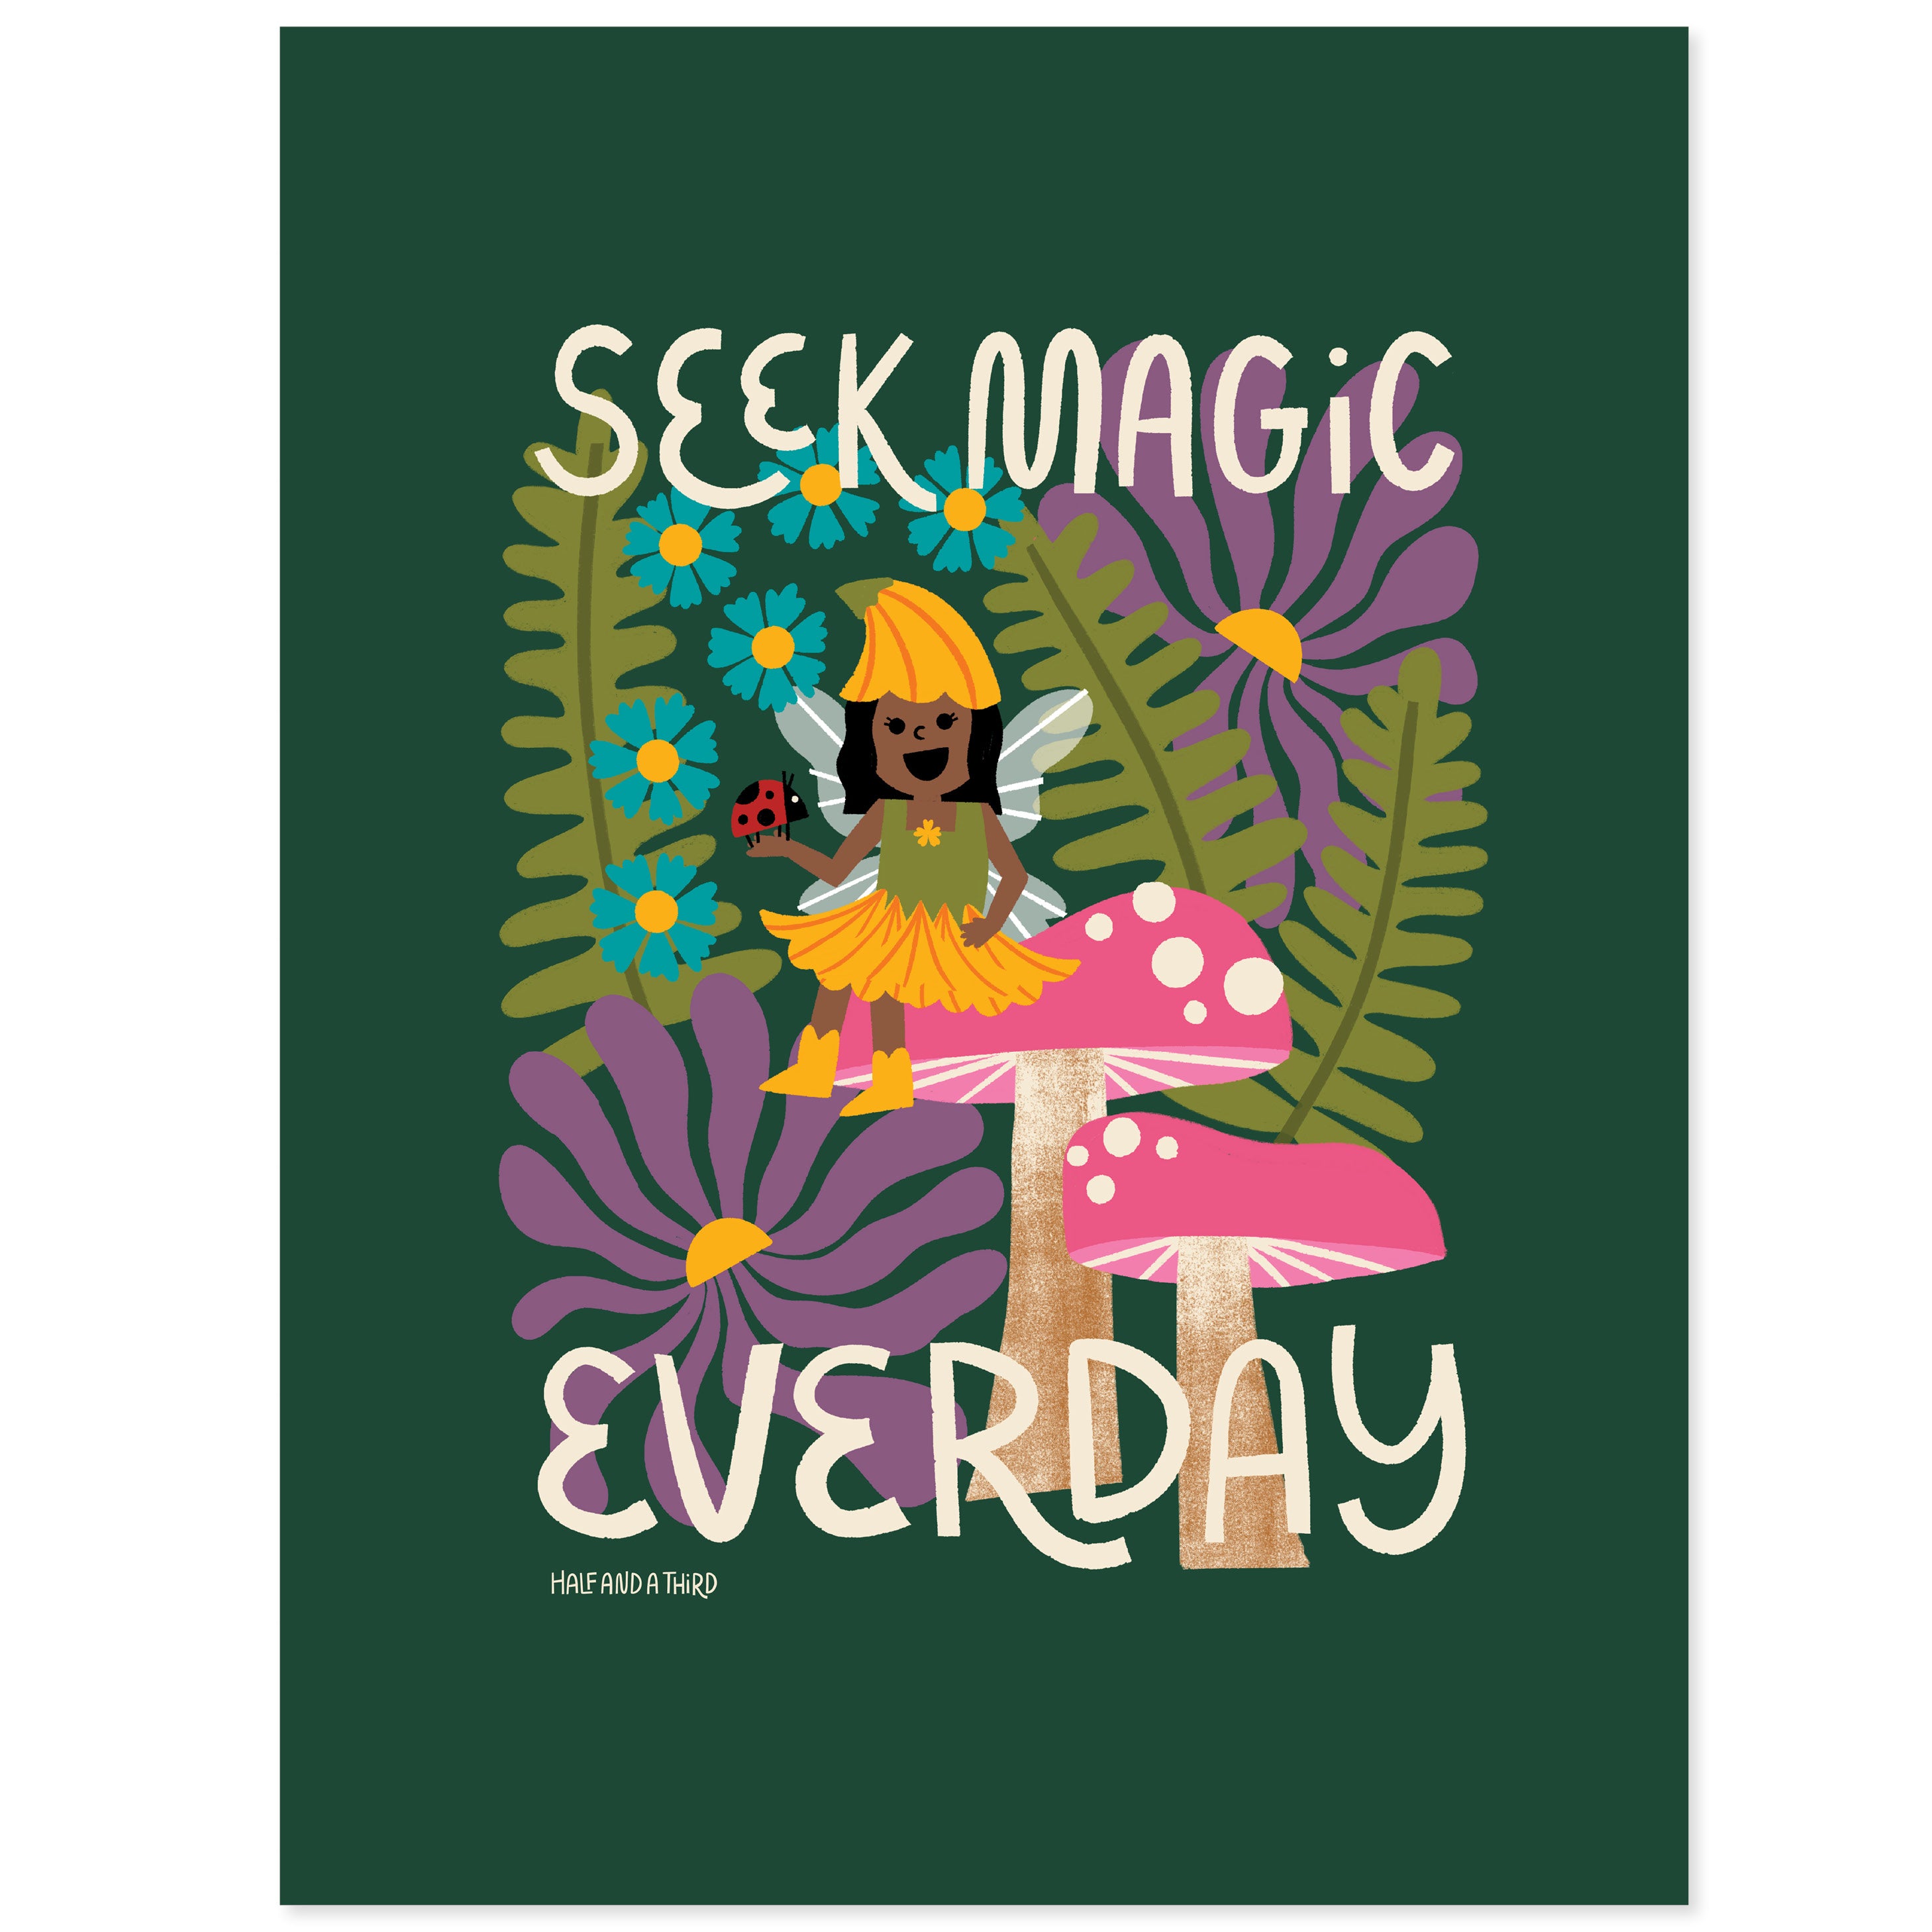 Seek Magic Everyday Print, Half and a THird